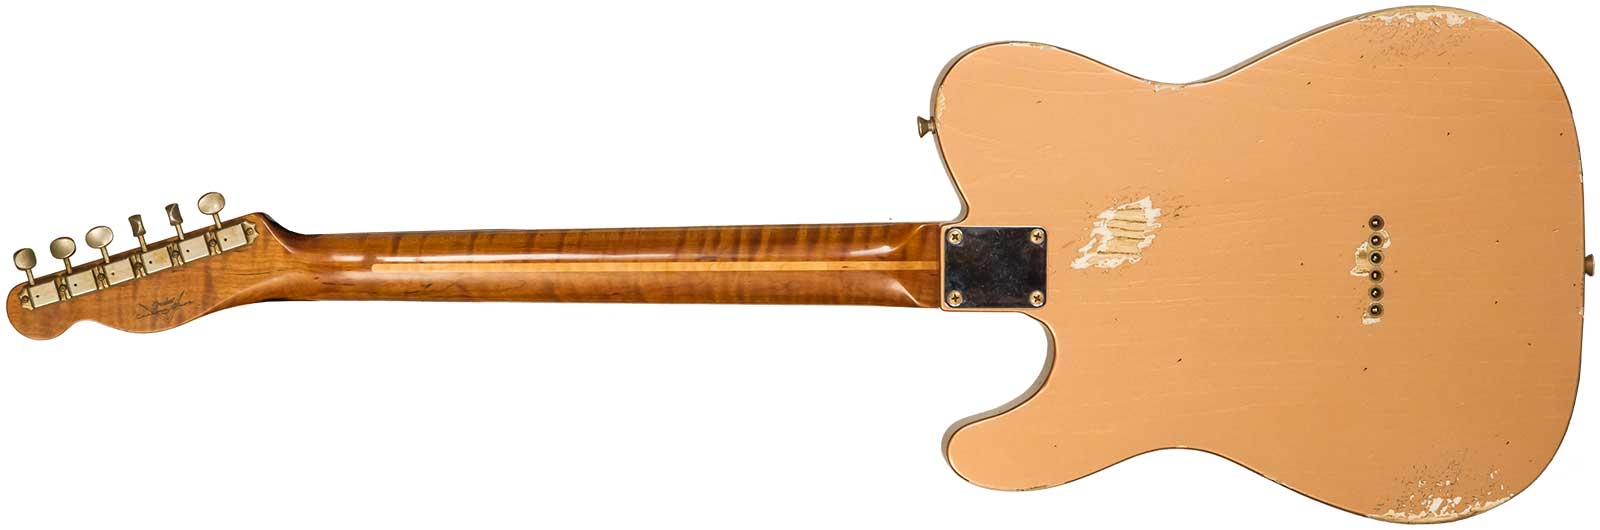 Fender Custom Shop Tele 1952 2s Ht Mn #r136733 - Relic Copper - Televorm elektrische gitaar - Variation 1